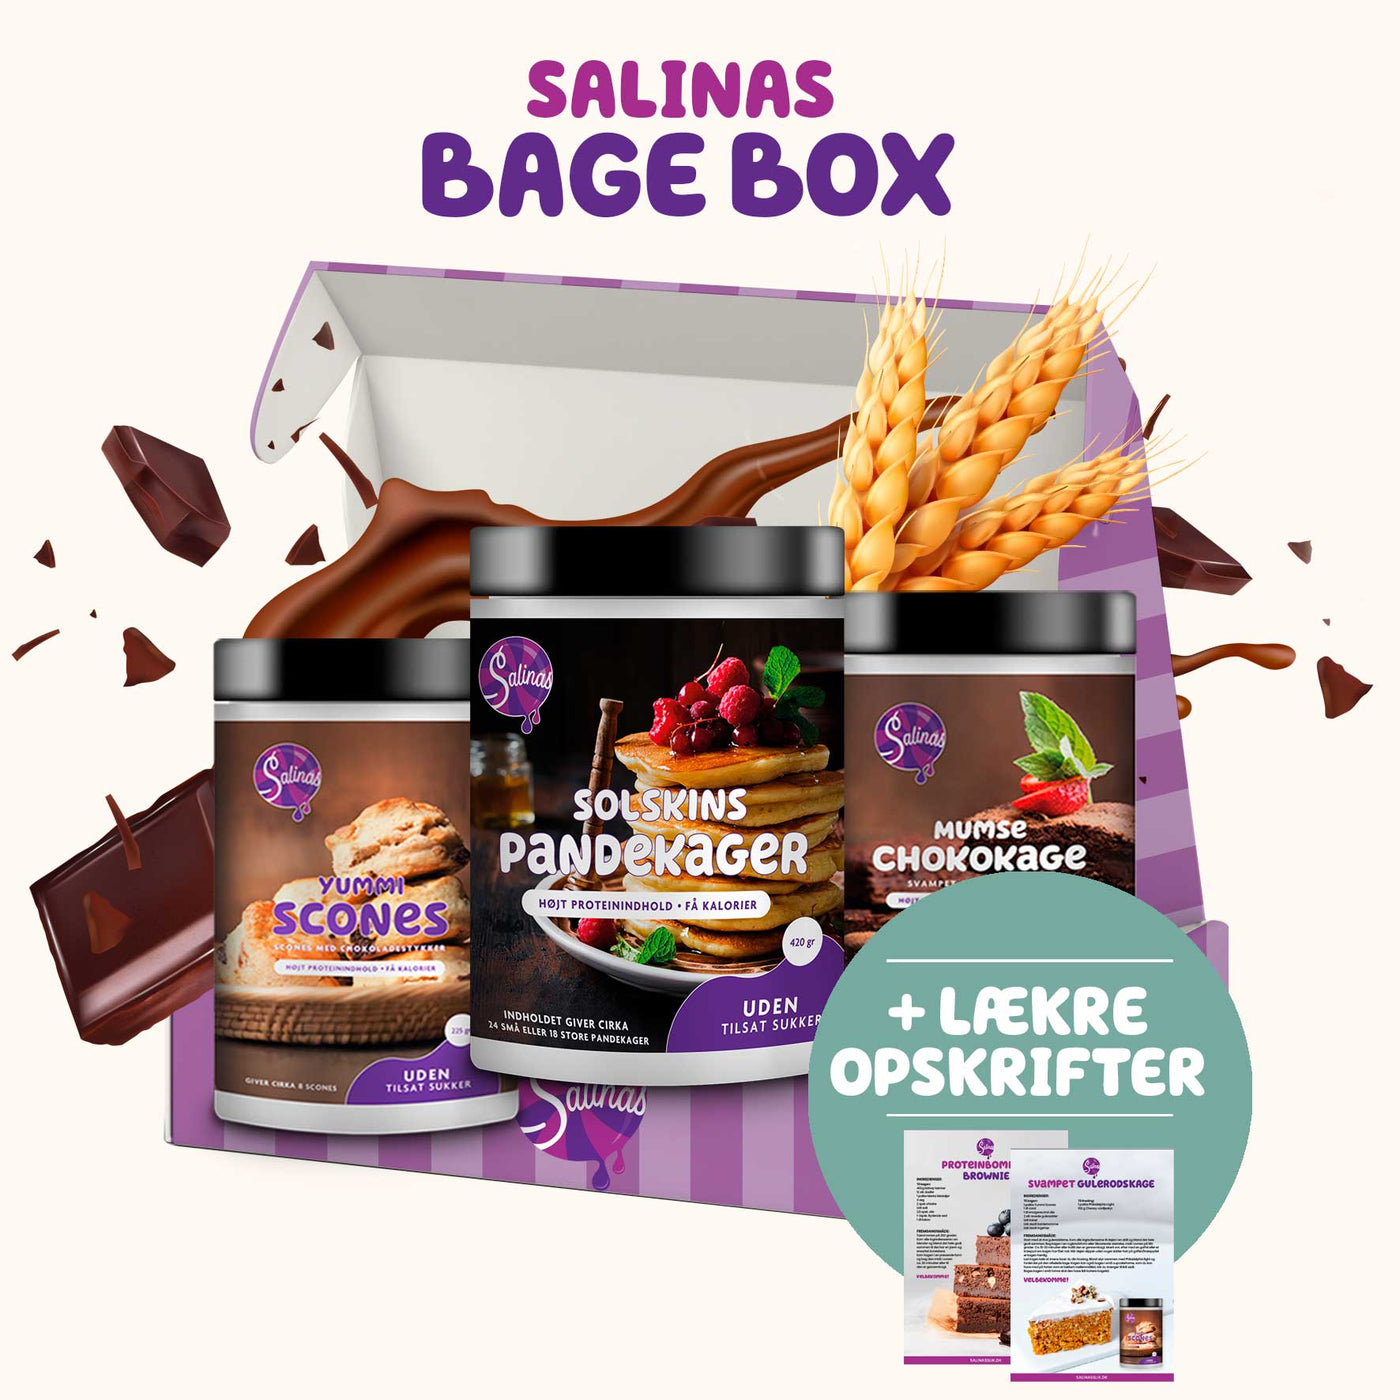 Salinas Bage Box